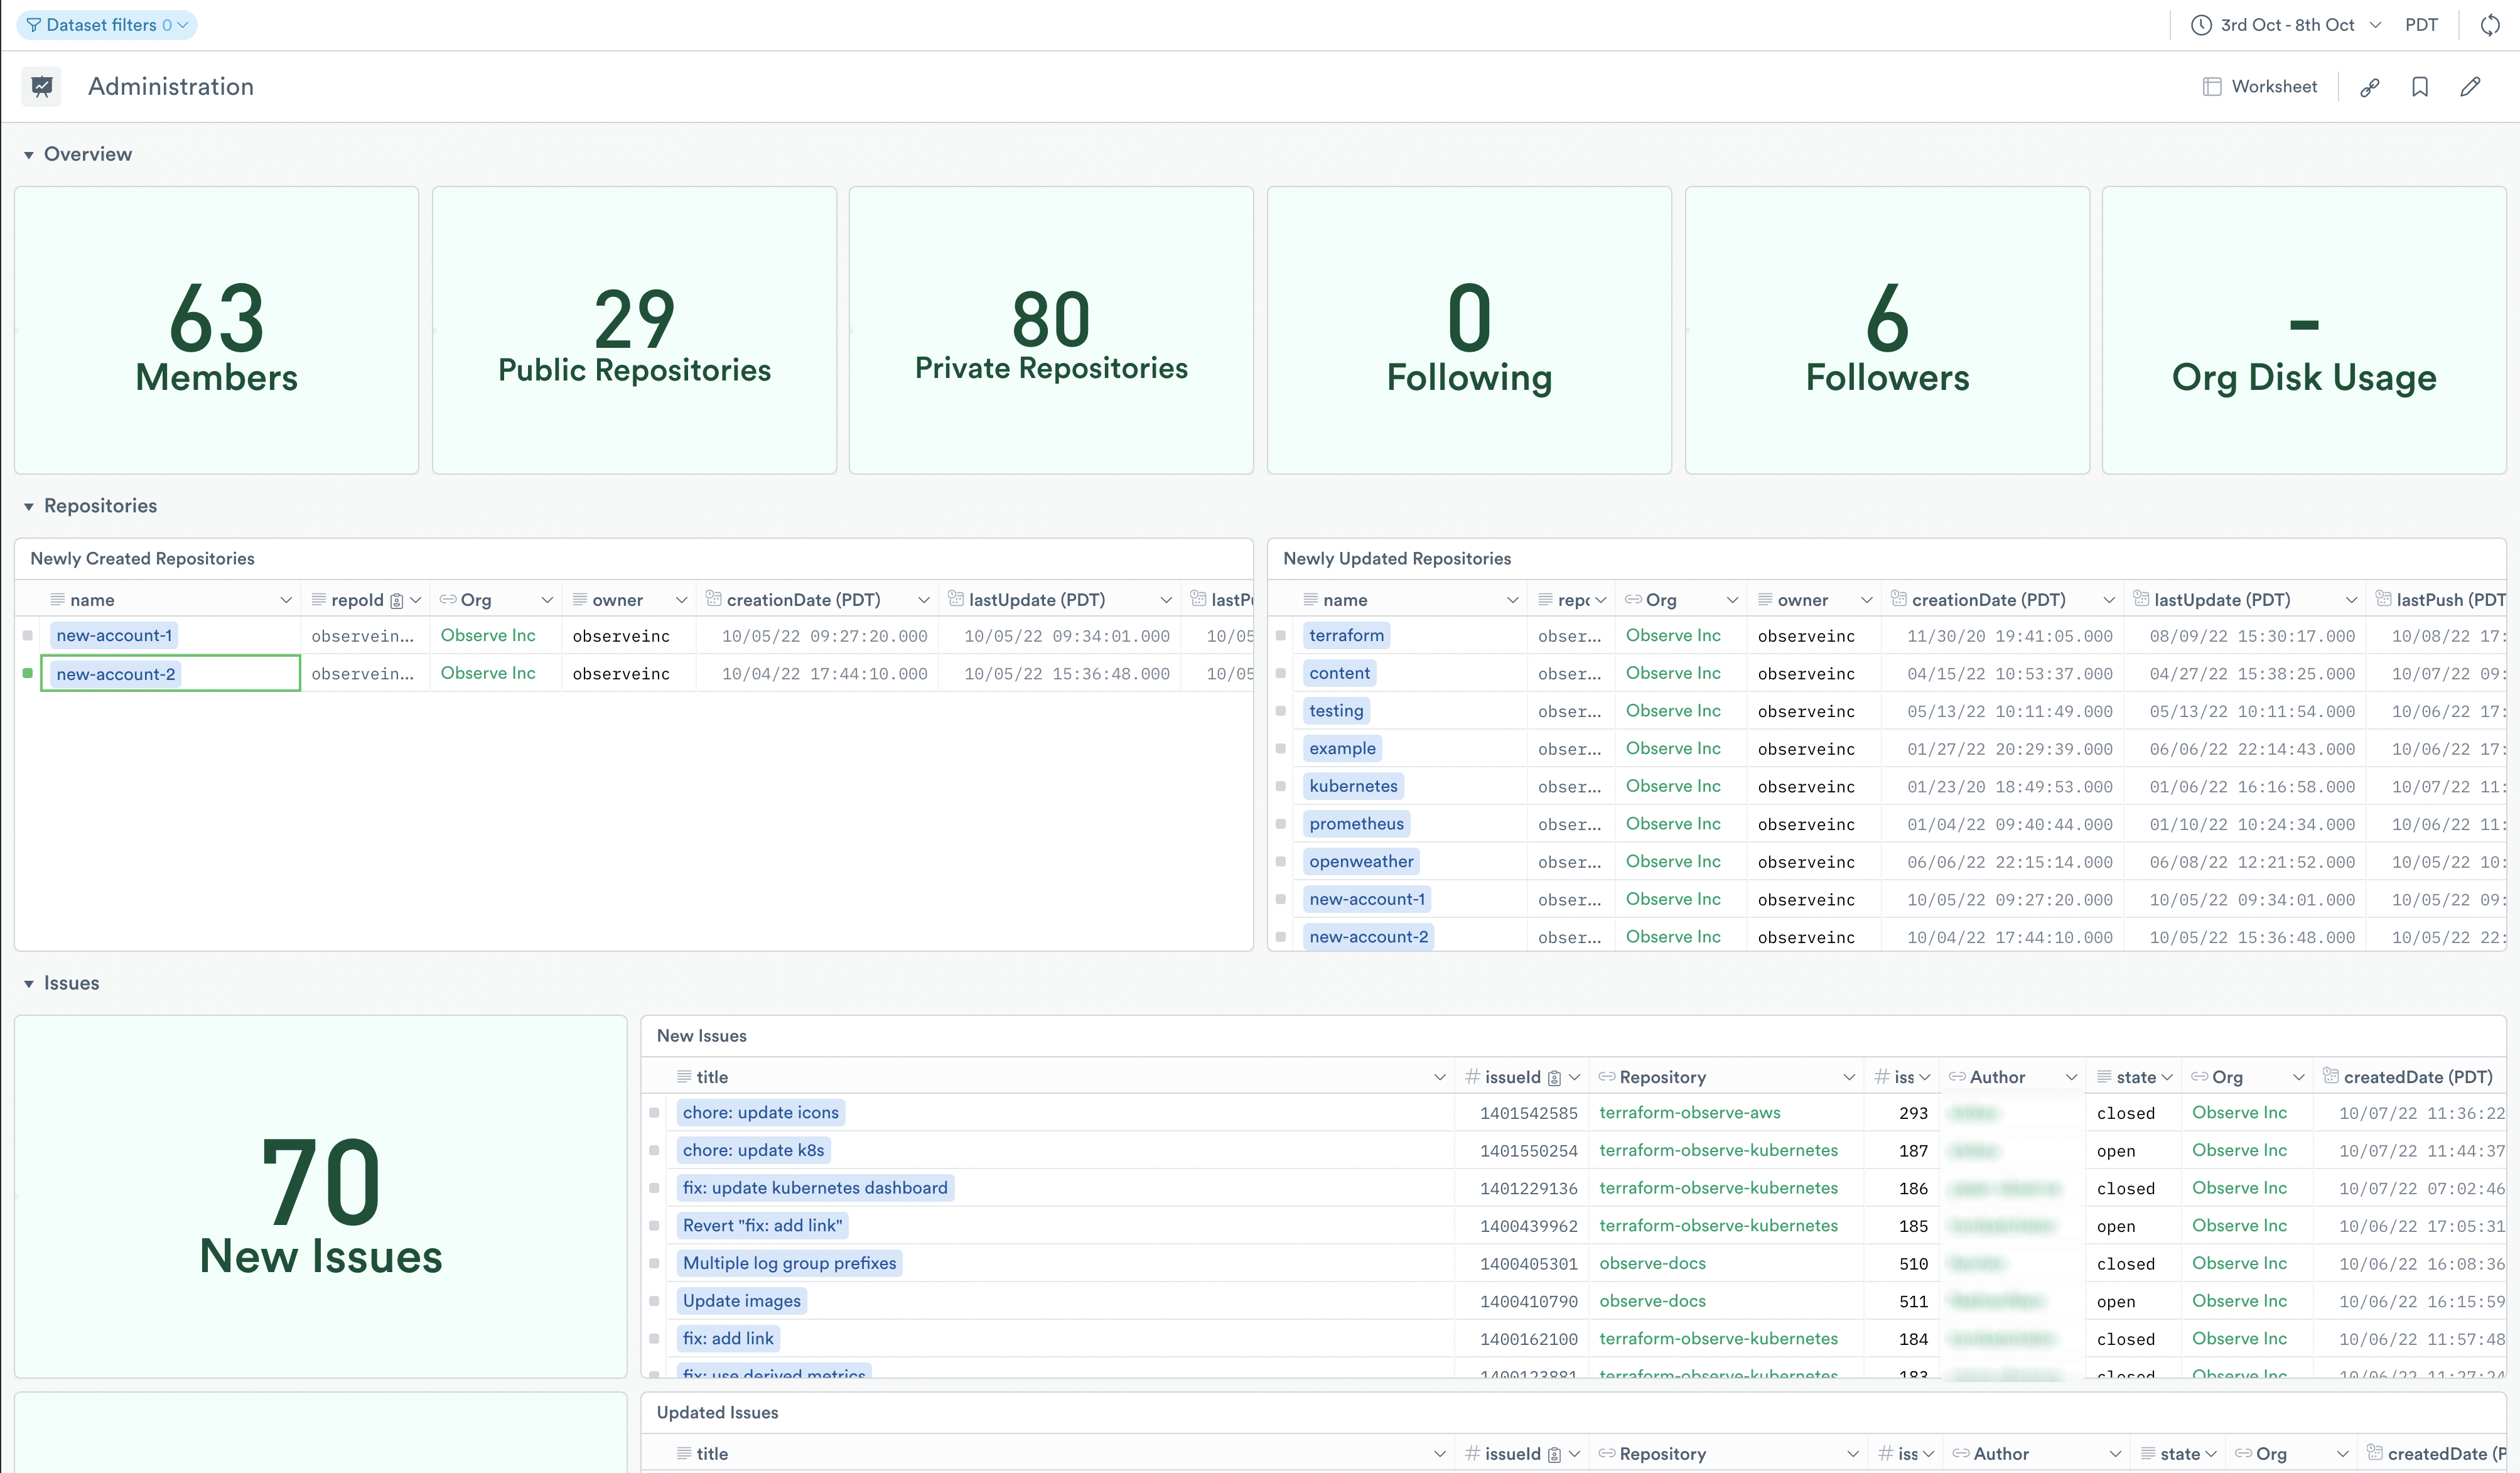 Administration dashboard for GitHub.